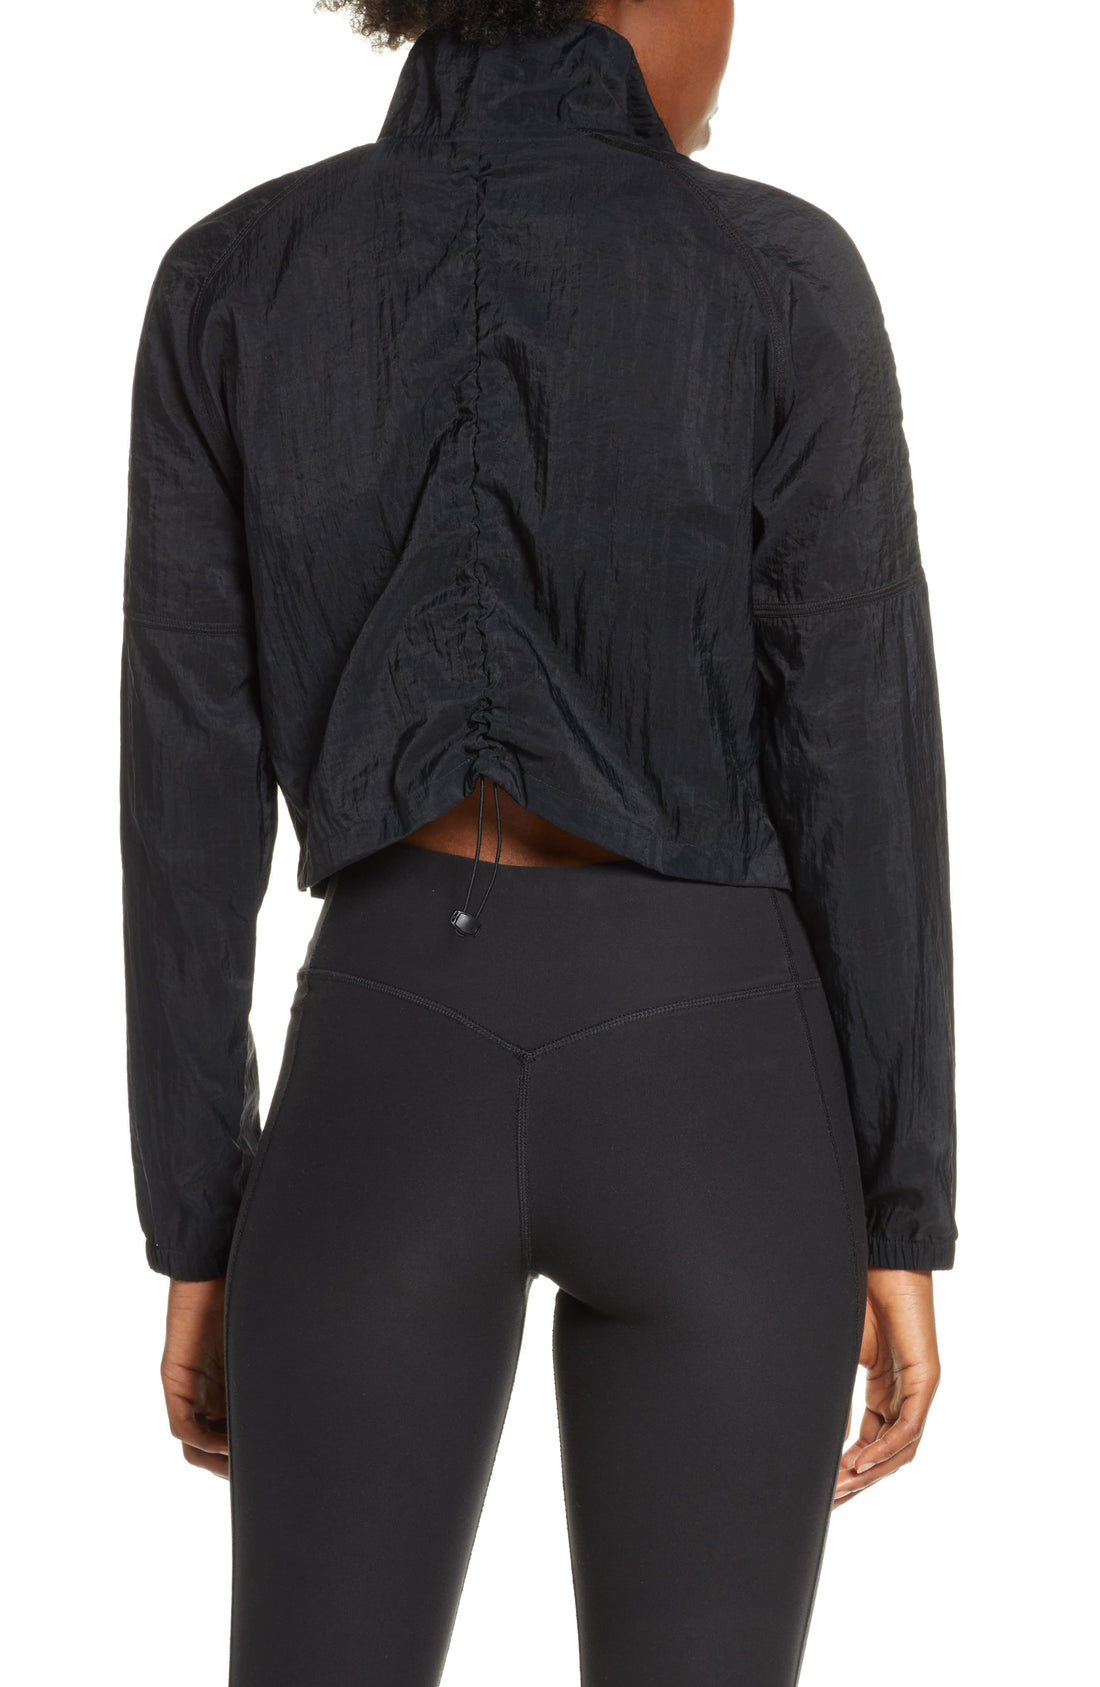 Nike Womens Translucent Cropped Running Jacket Color Black/Phantom